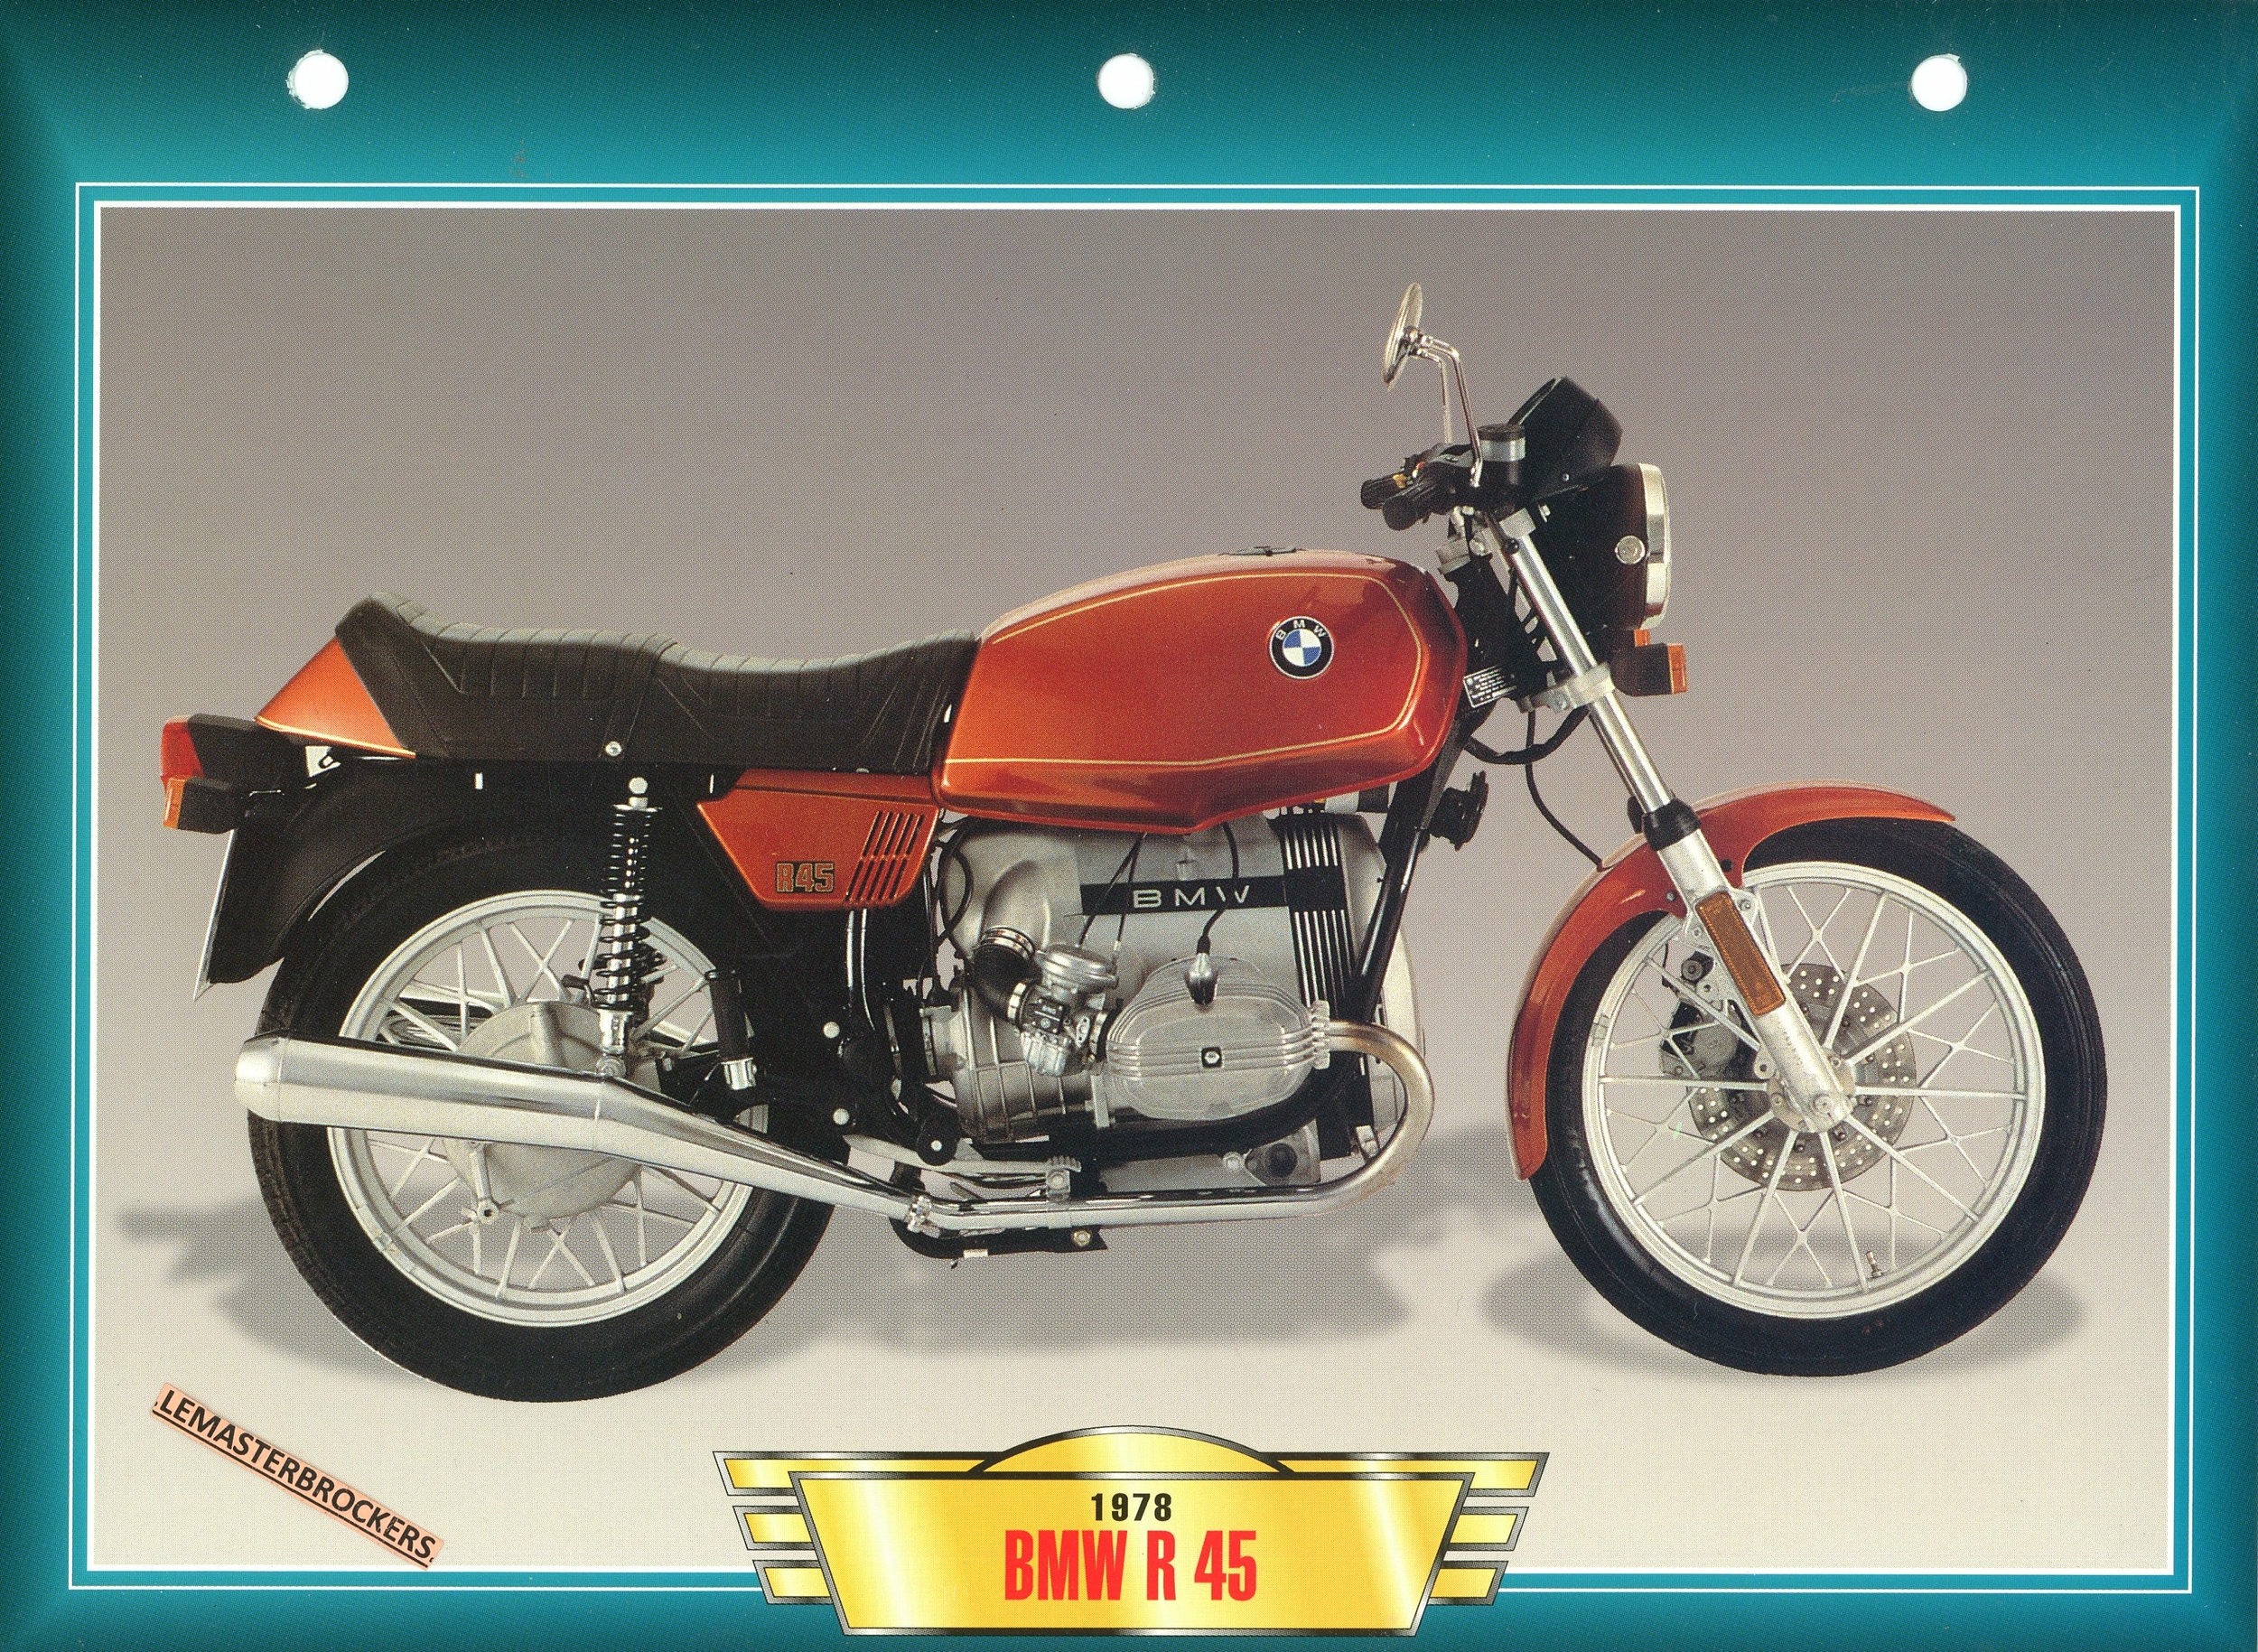 FICHE-MOTO-BMW-R45-1978-LEMASTERBROCKERS-CARS-MOTORCYCLES-ATLAS